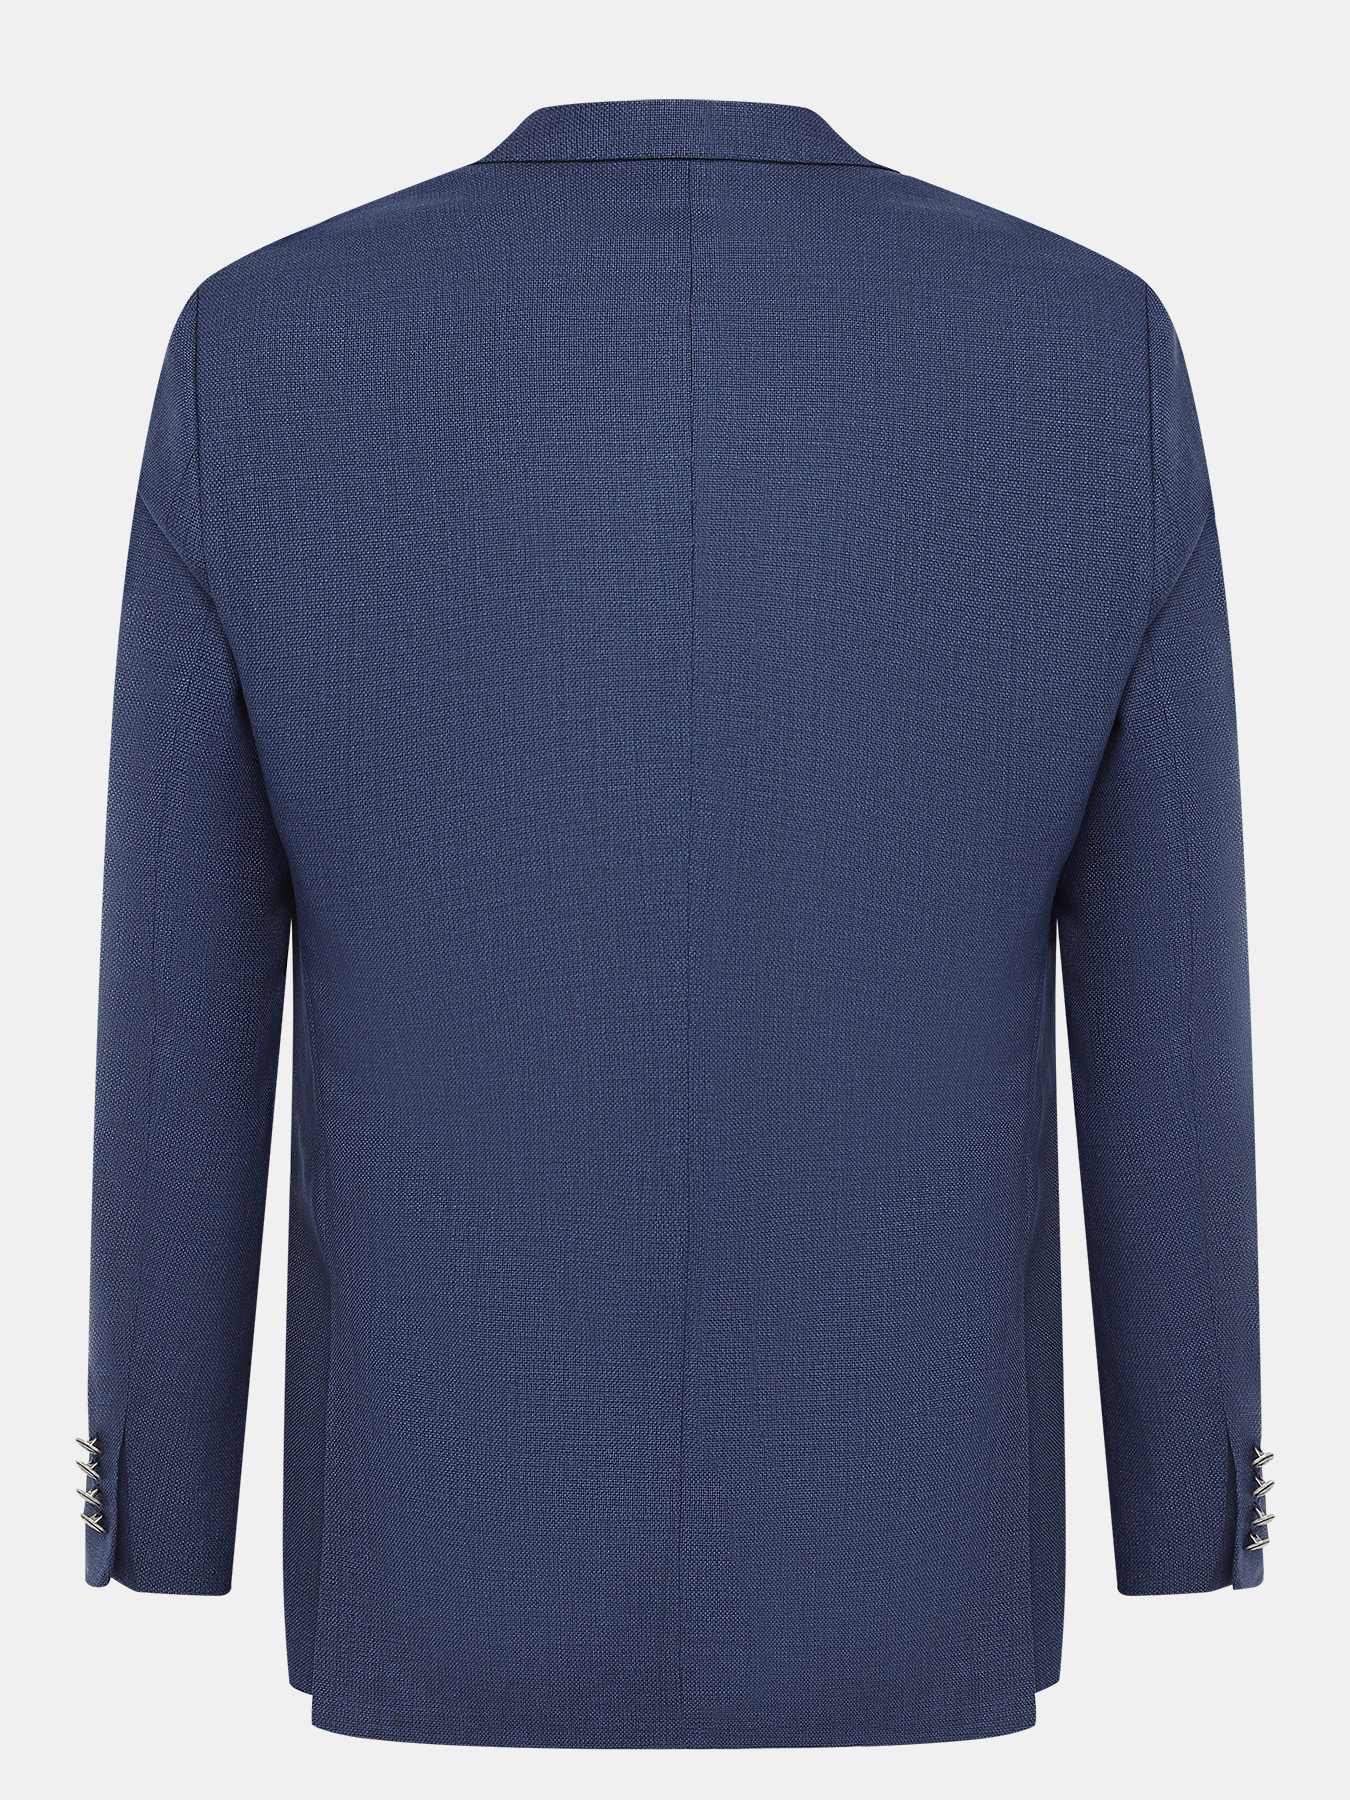 Пиджак Alessandro Manzoni 396180-382, цвет синий, размер 46 - фото 6